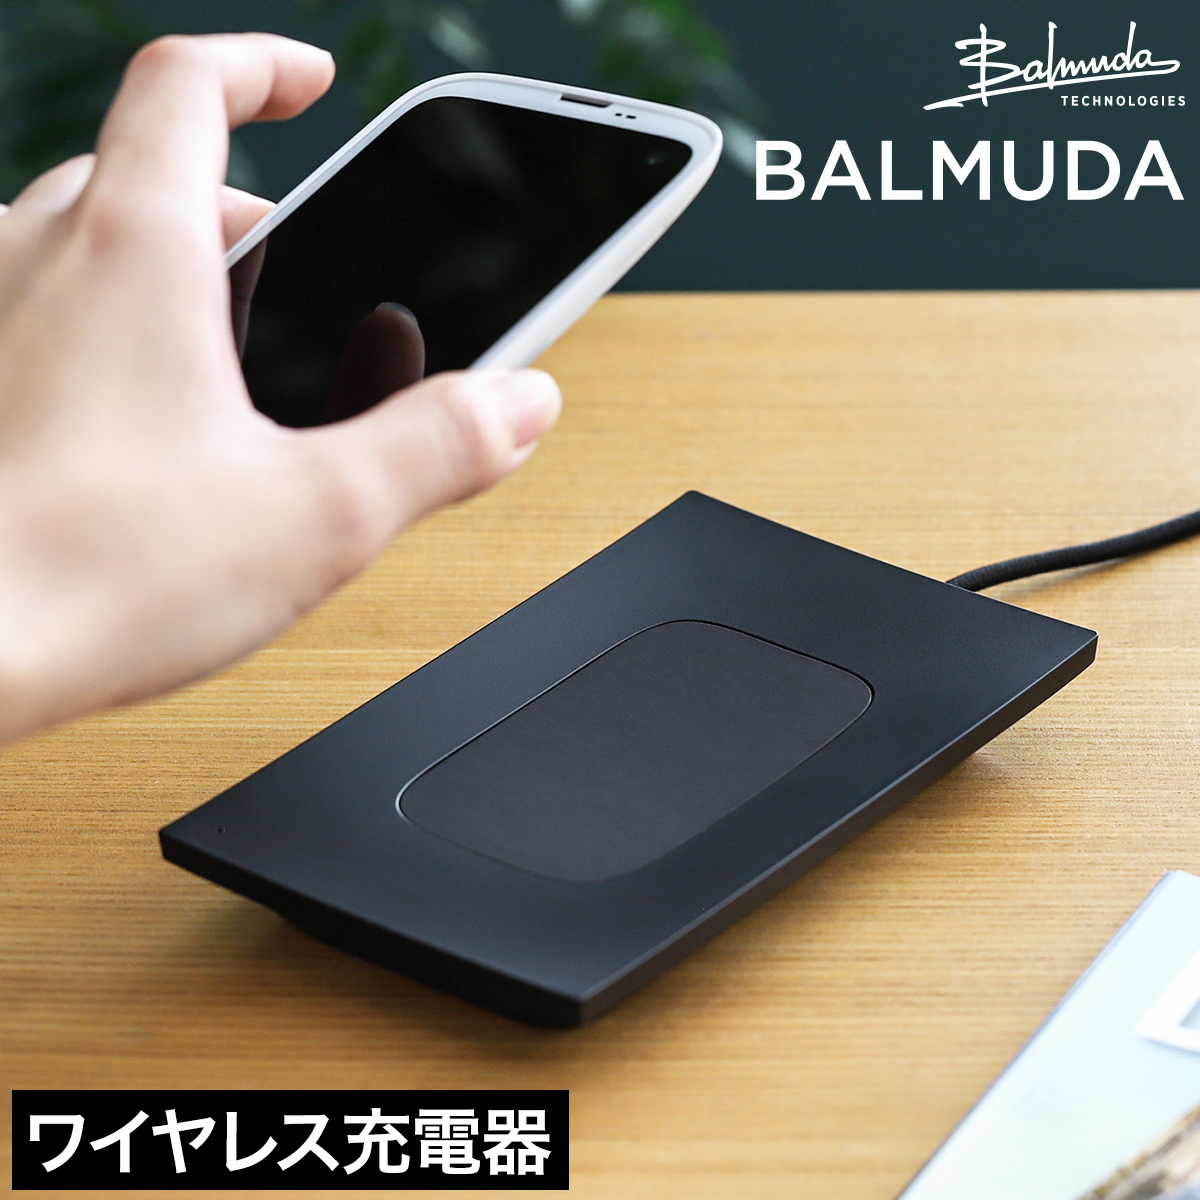 BALMUDA Phone ワイヤレス充電器 新品未開封 | rhinobombas.com.br